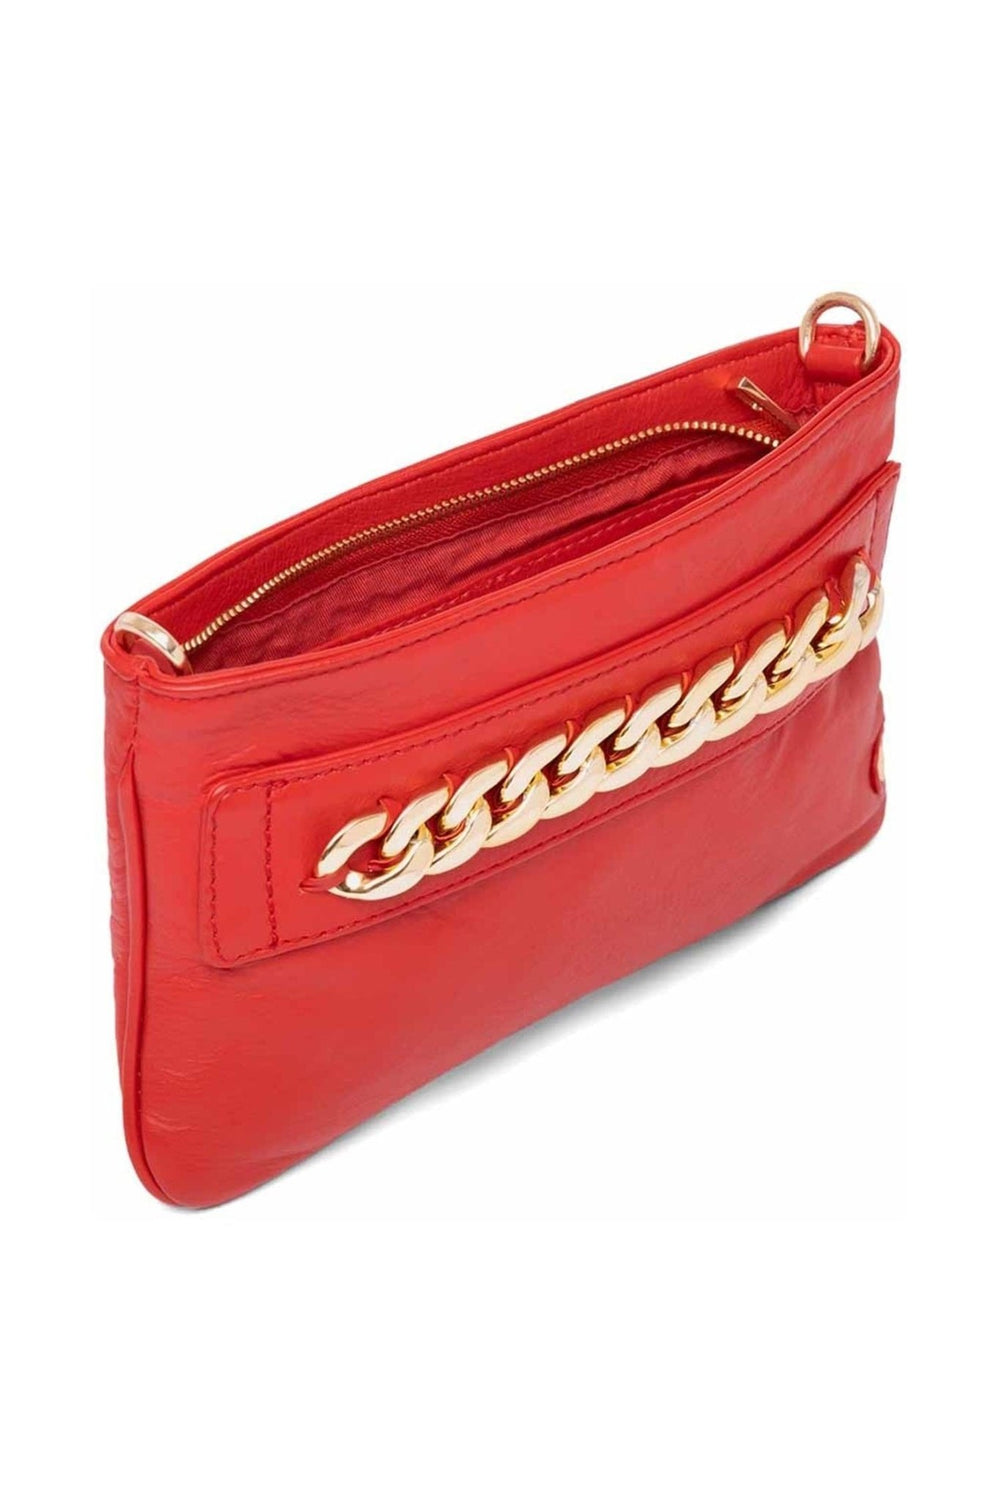 Small Bag / Clutch Red | Accessories | Smuk - Dameklær på nett